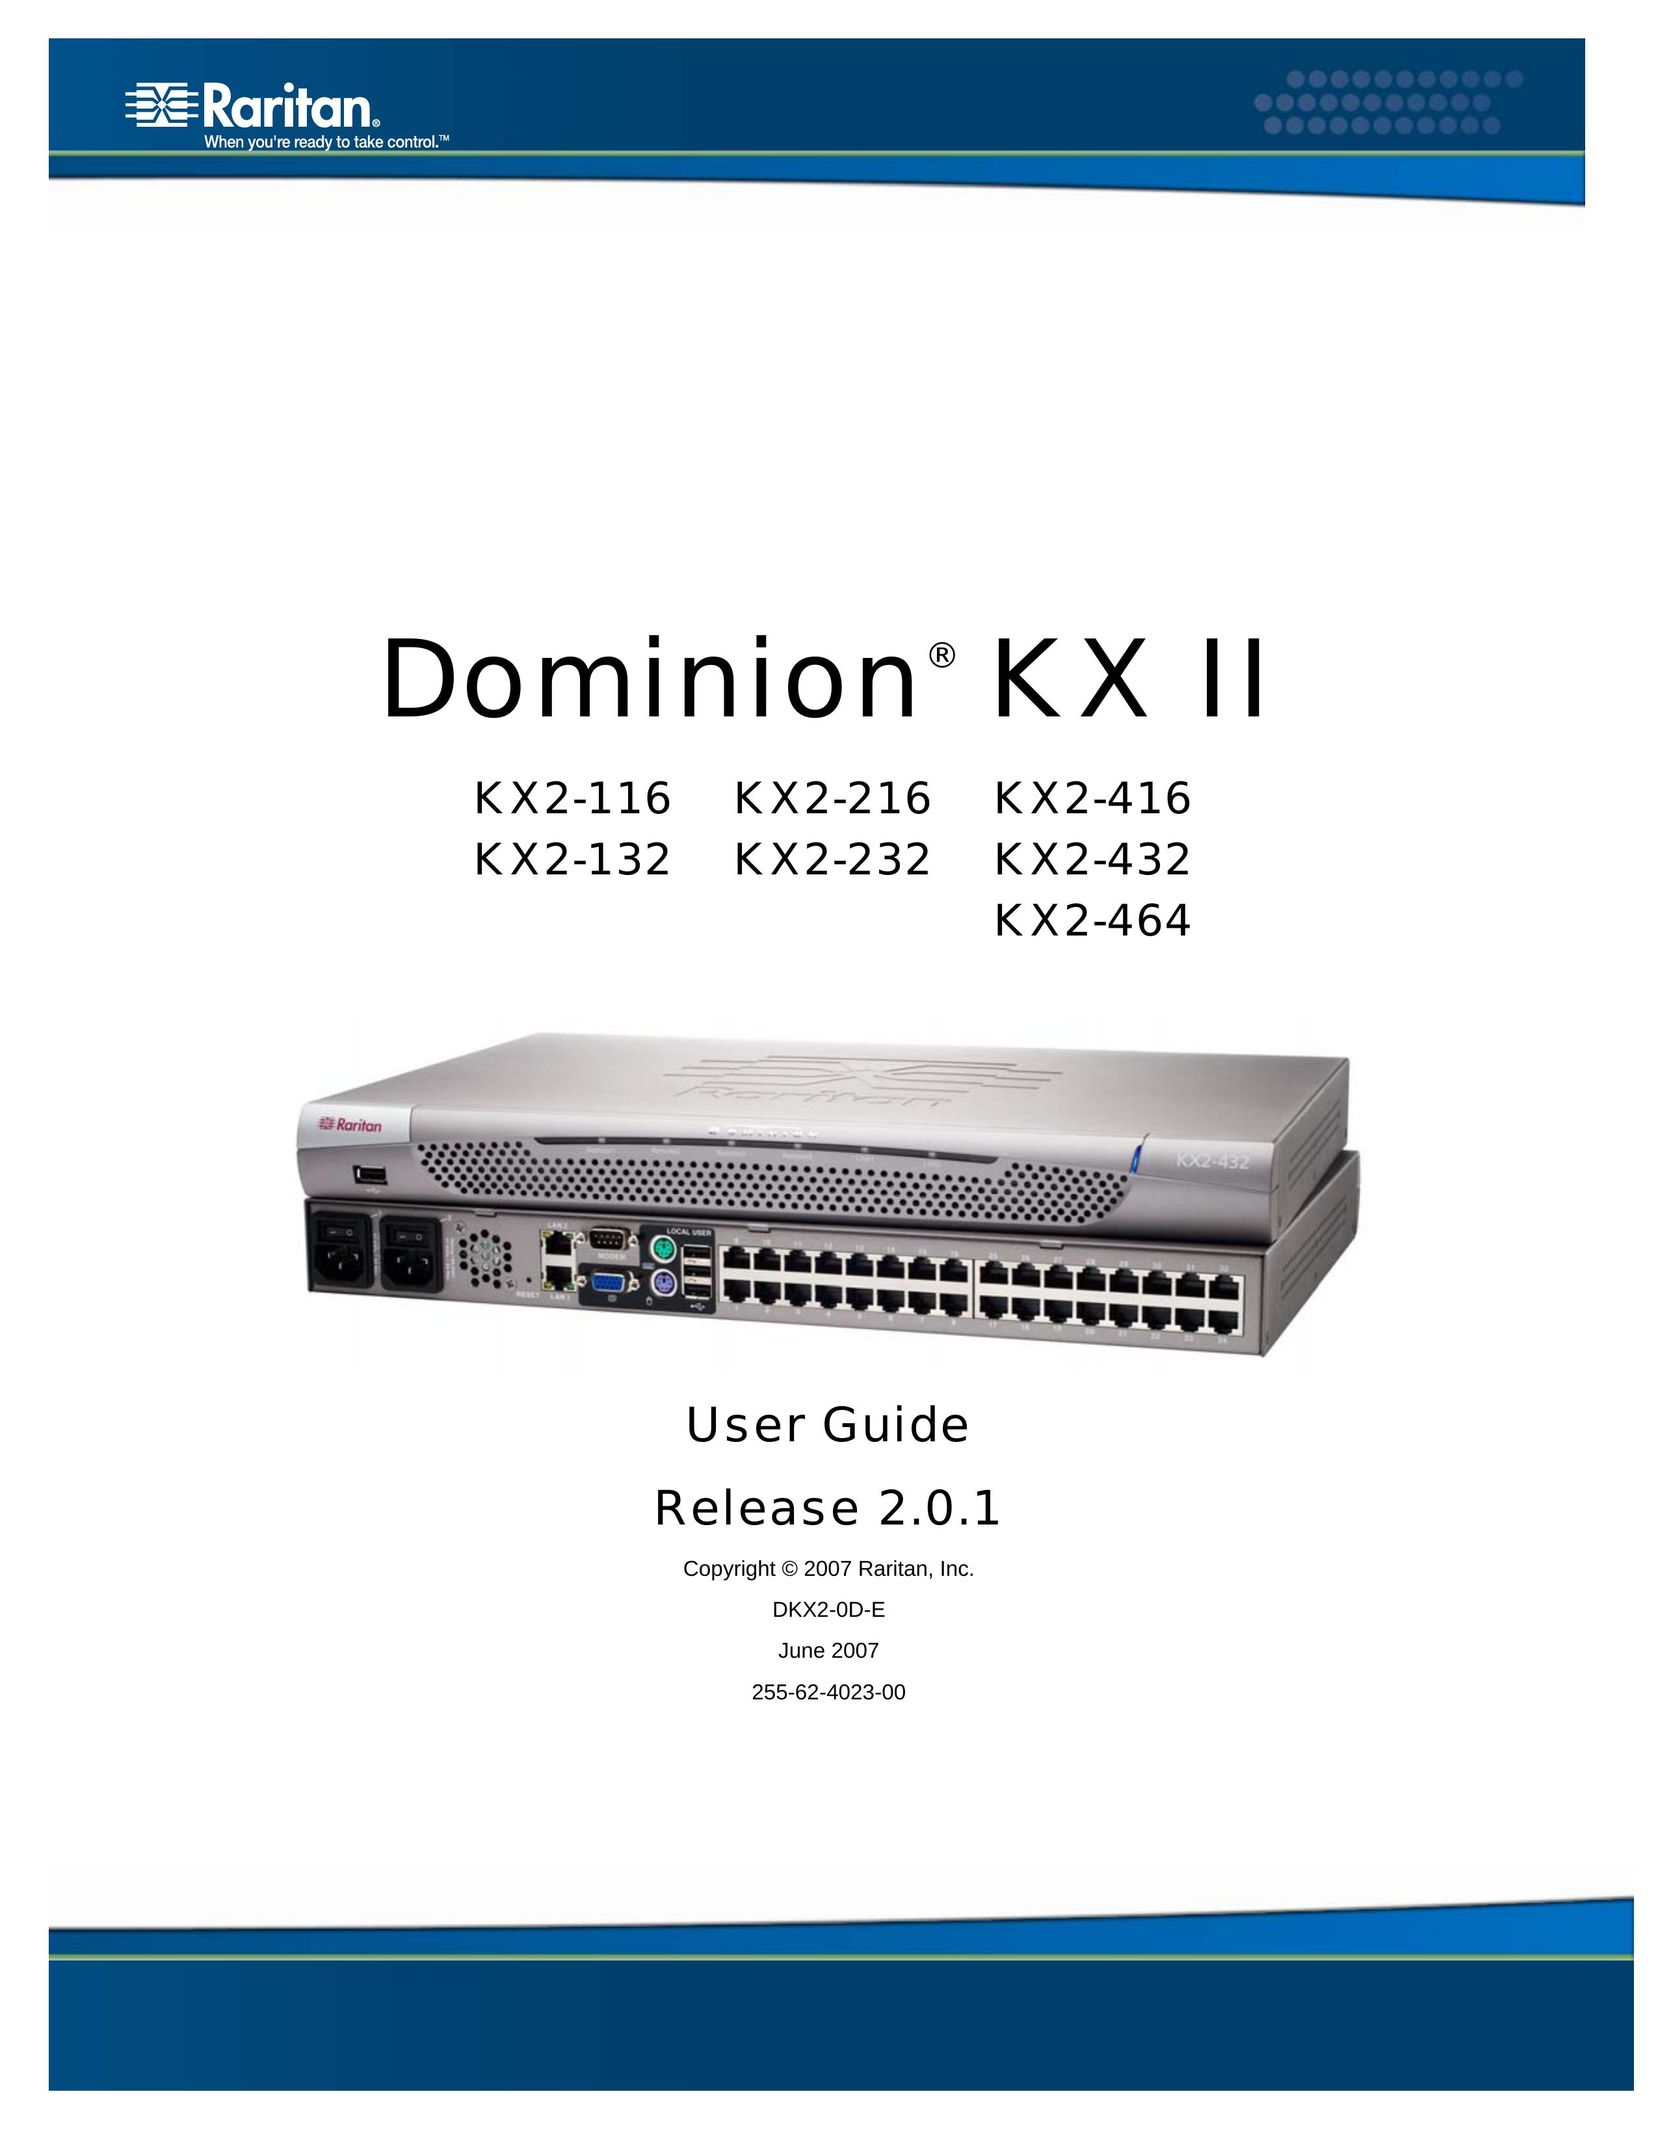 Raritan Computer KX2-216 Network Router User Manual